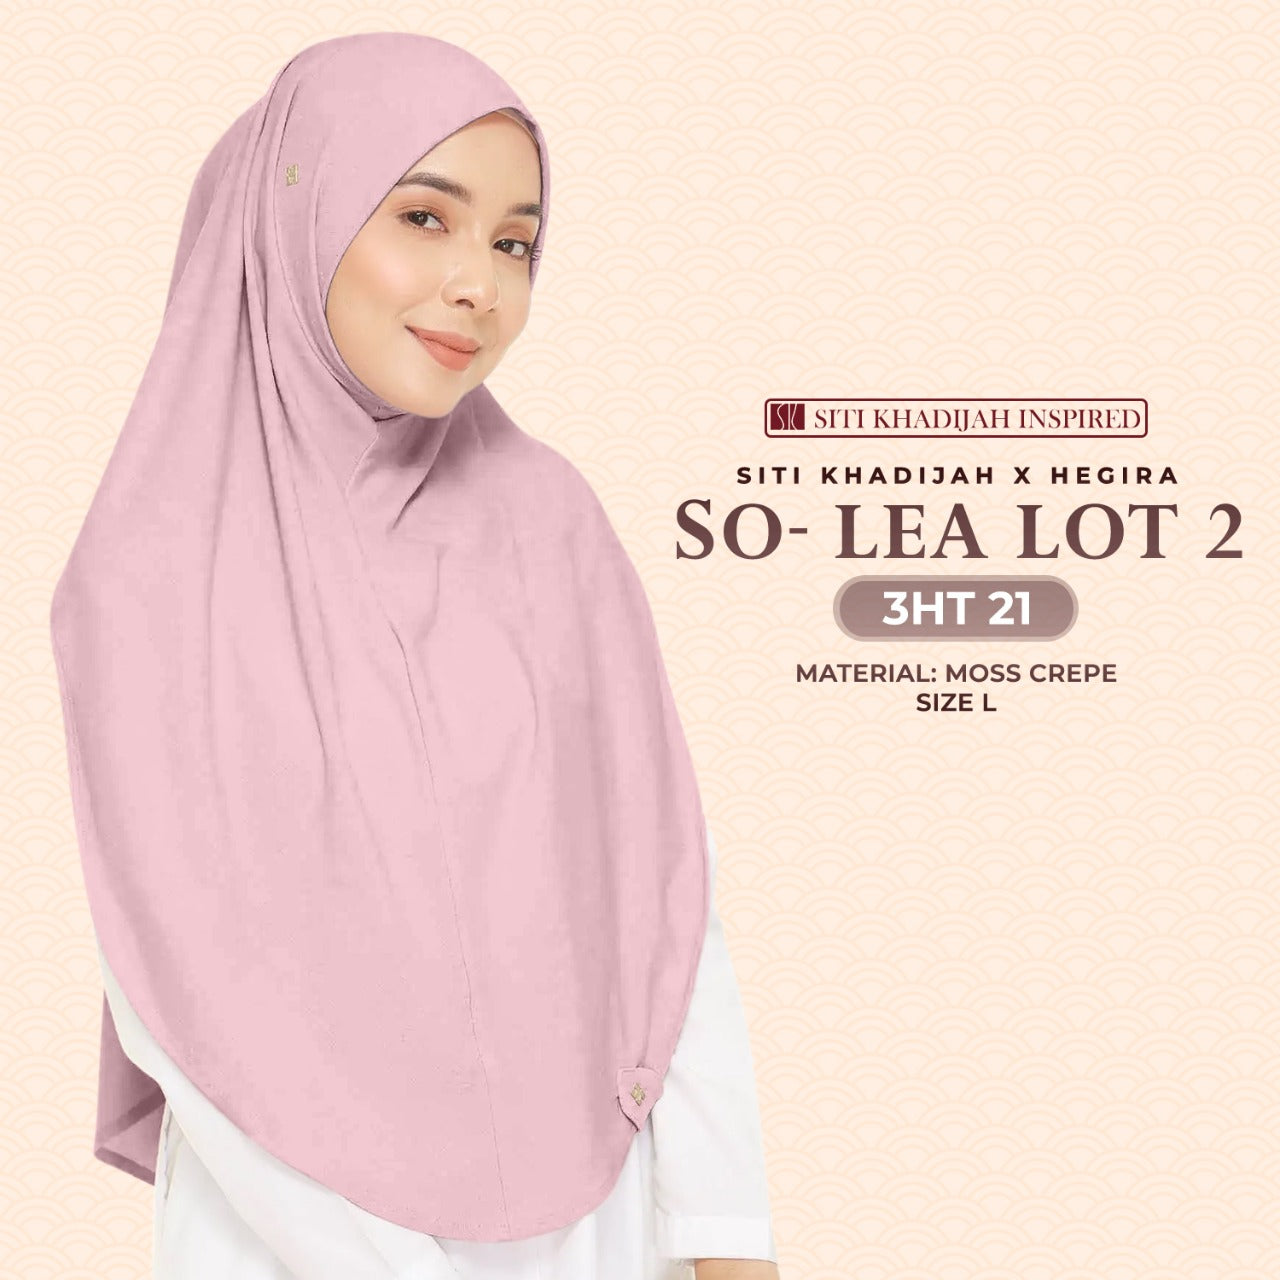 Siti Khadijah X Hegira So-Lea Lot 2 Tudung Collection